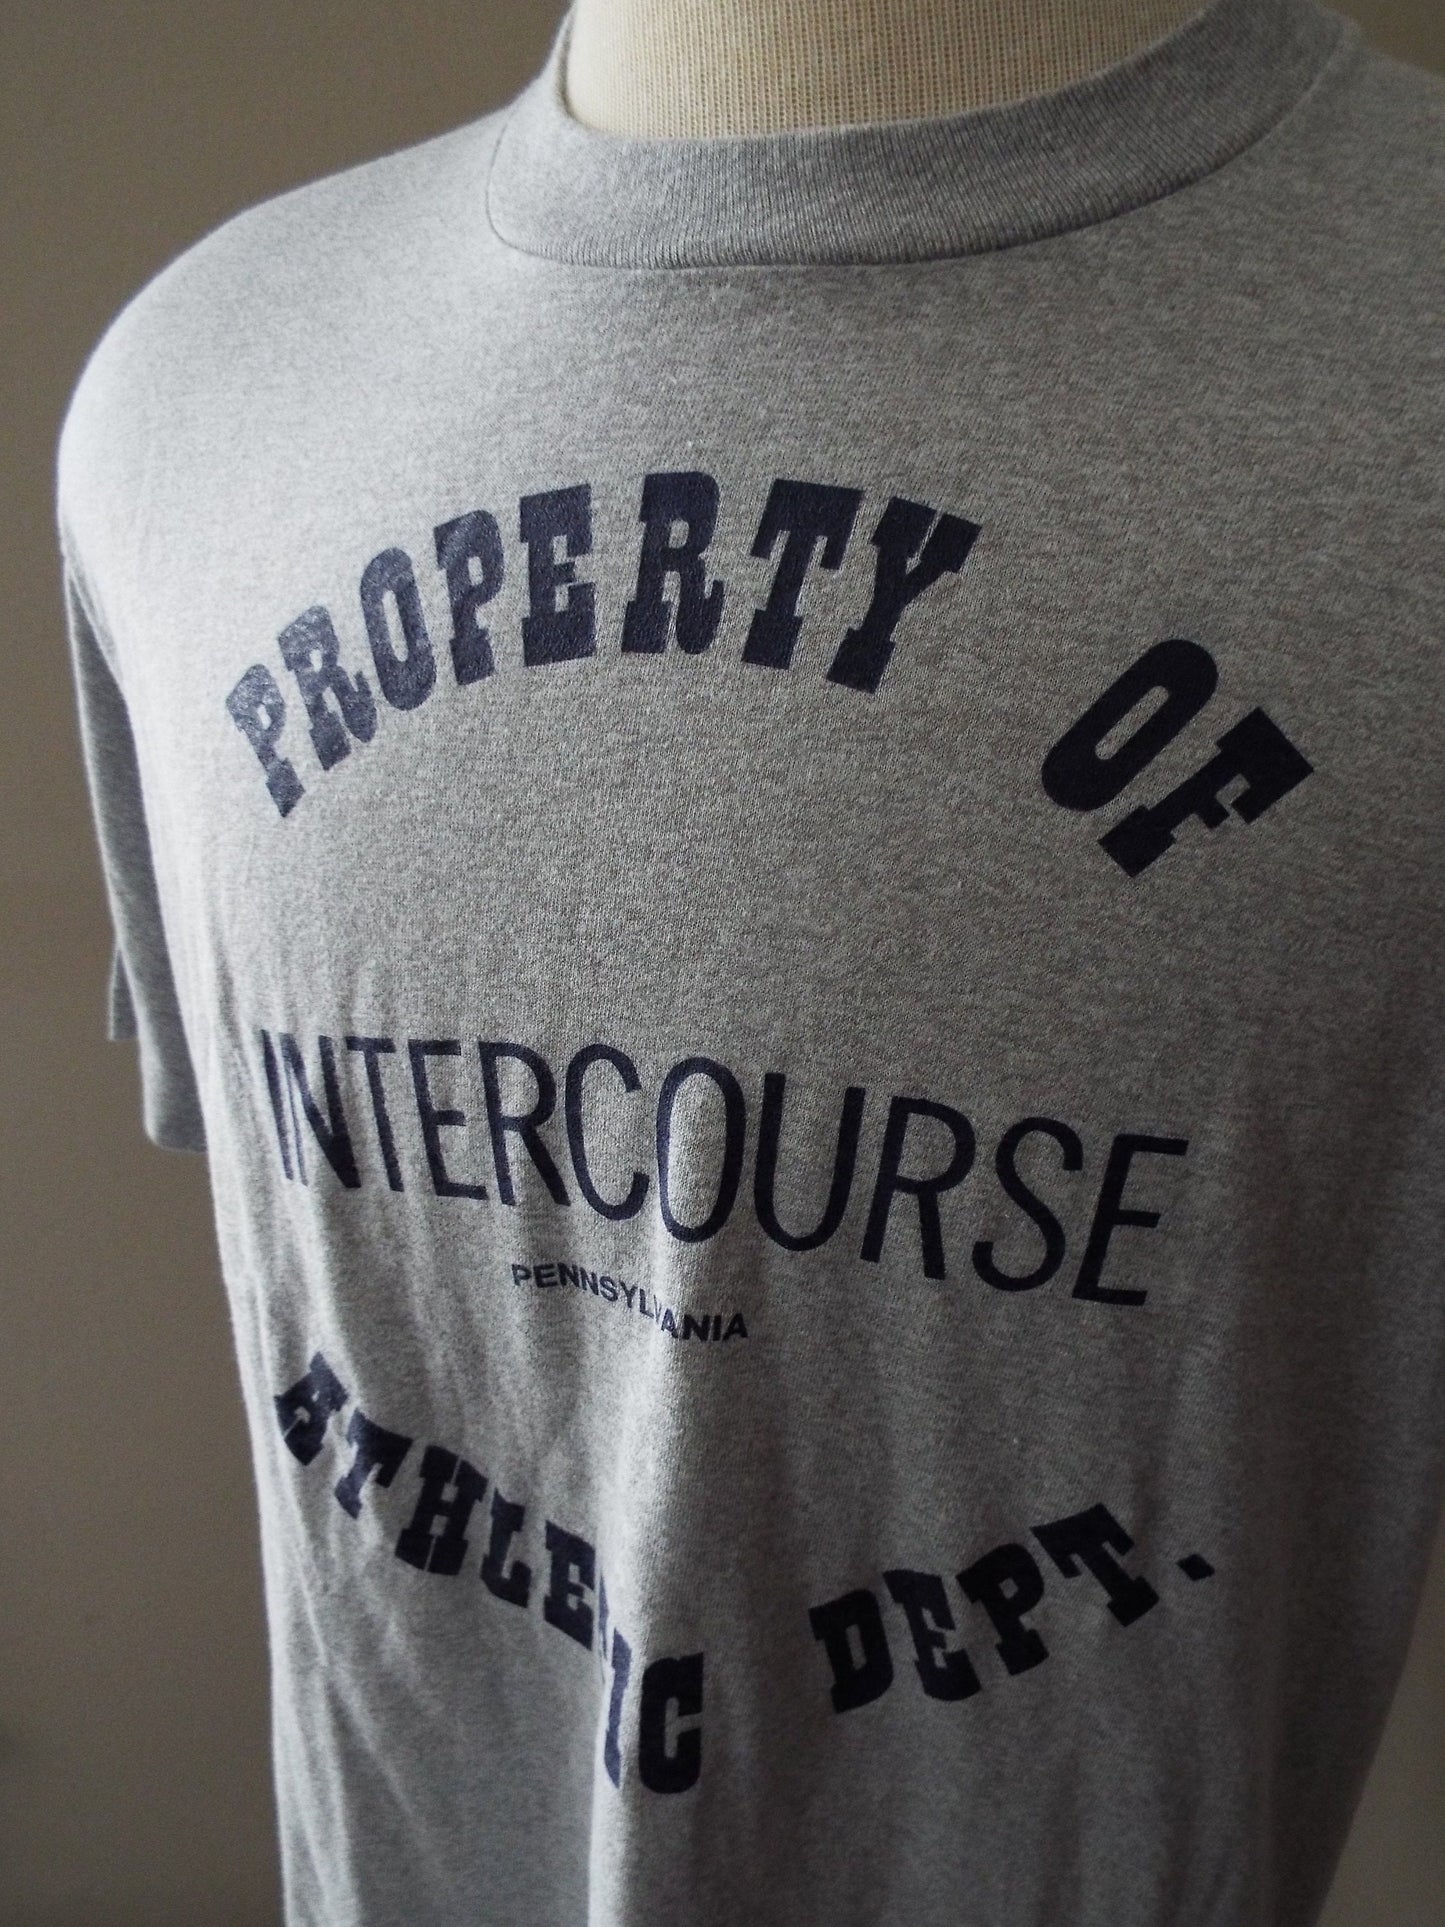 Vintage Intercourse PA T Shirt by Screen Stars